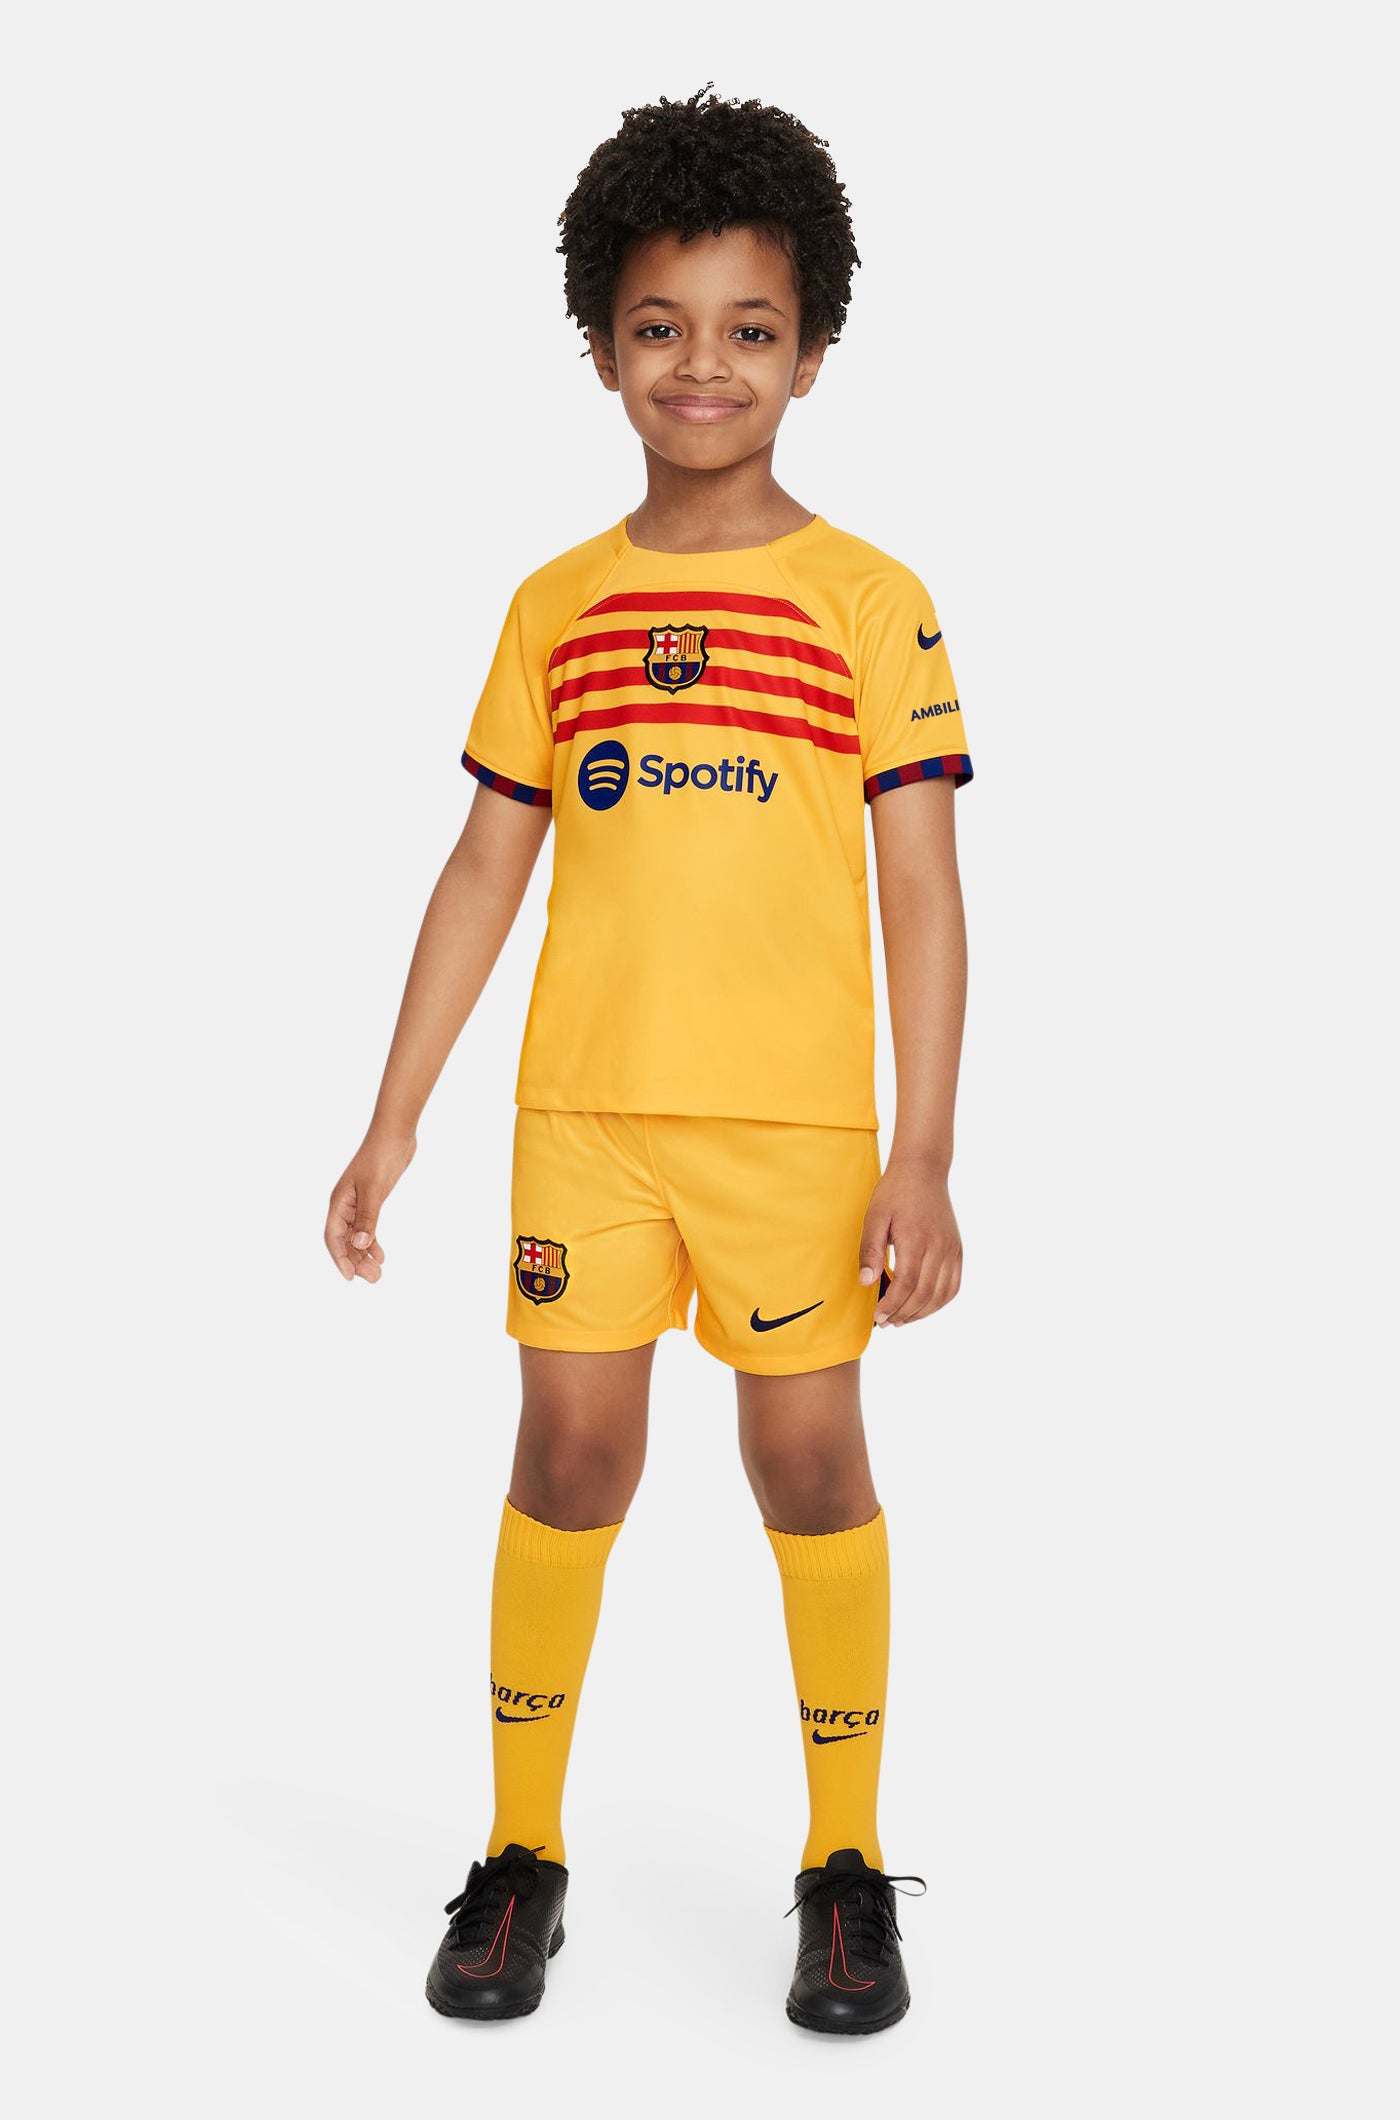 FC Barcelona fourth kit 22/23 - Little Kids - PEDRI